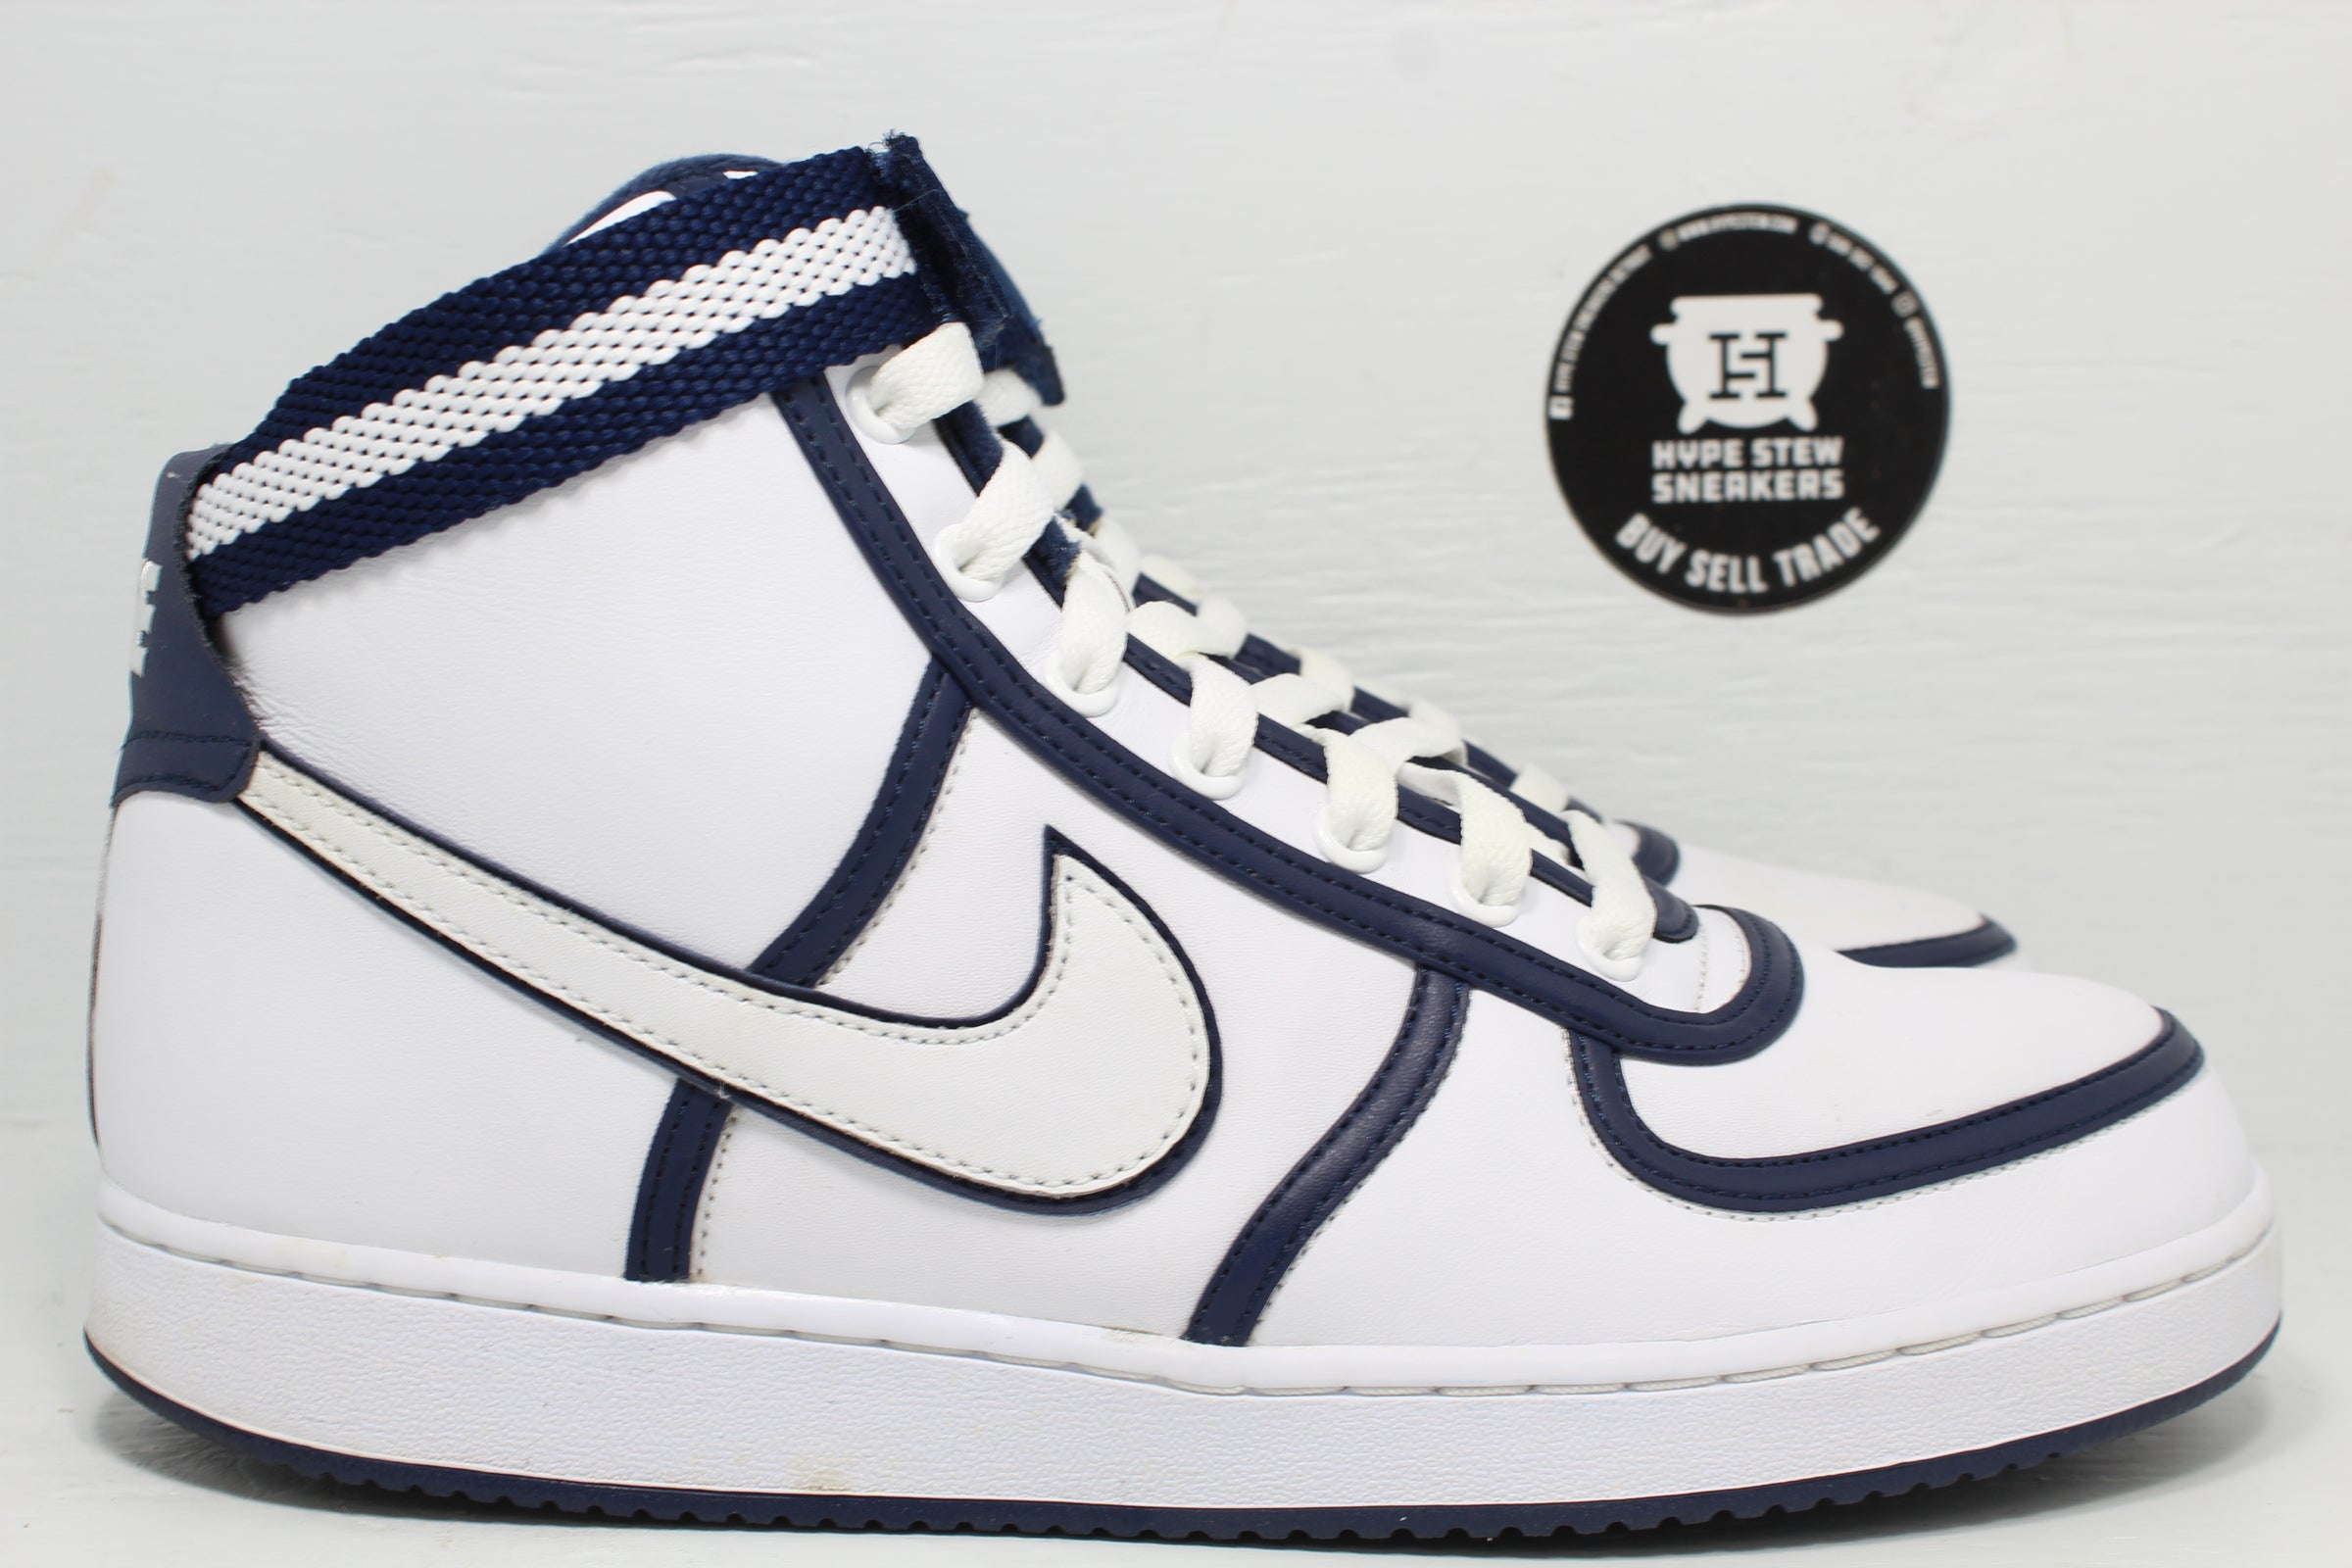 Nike Vandal White Navy | Hype Stew Sneakers Detroit